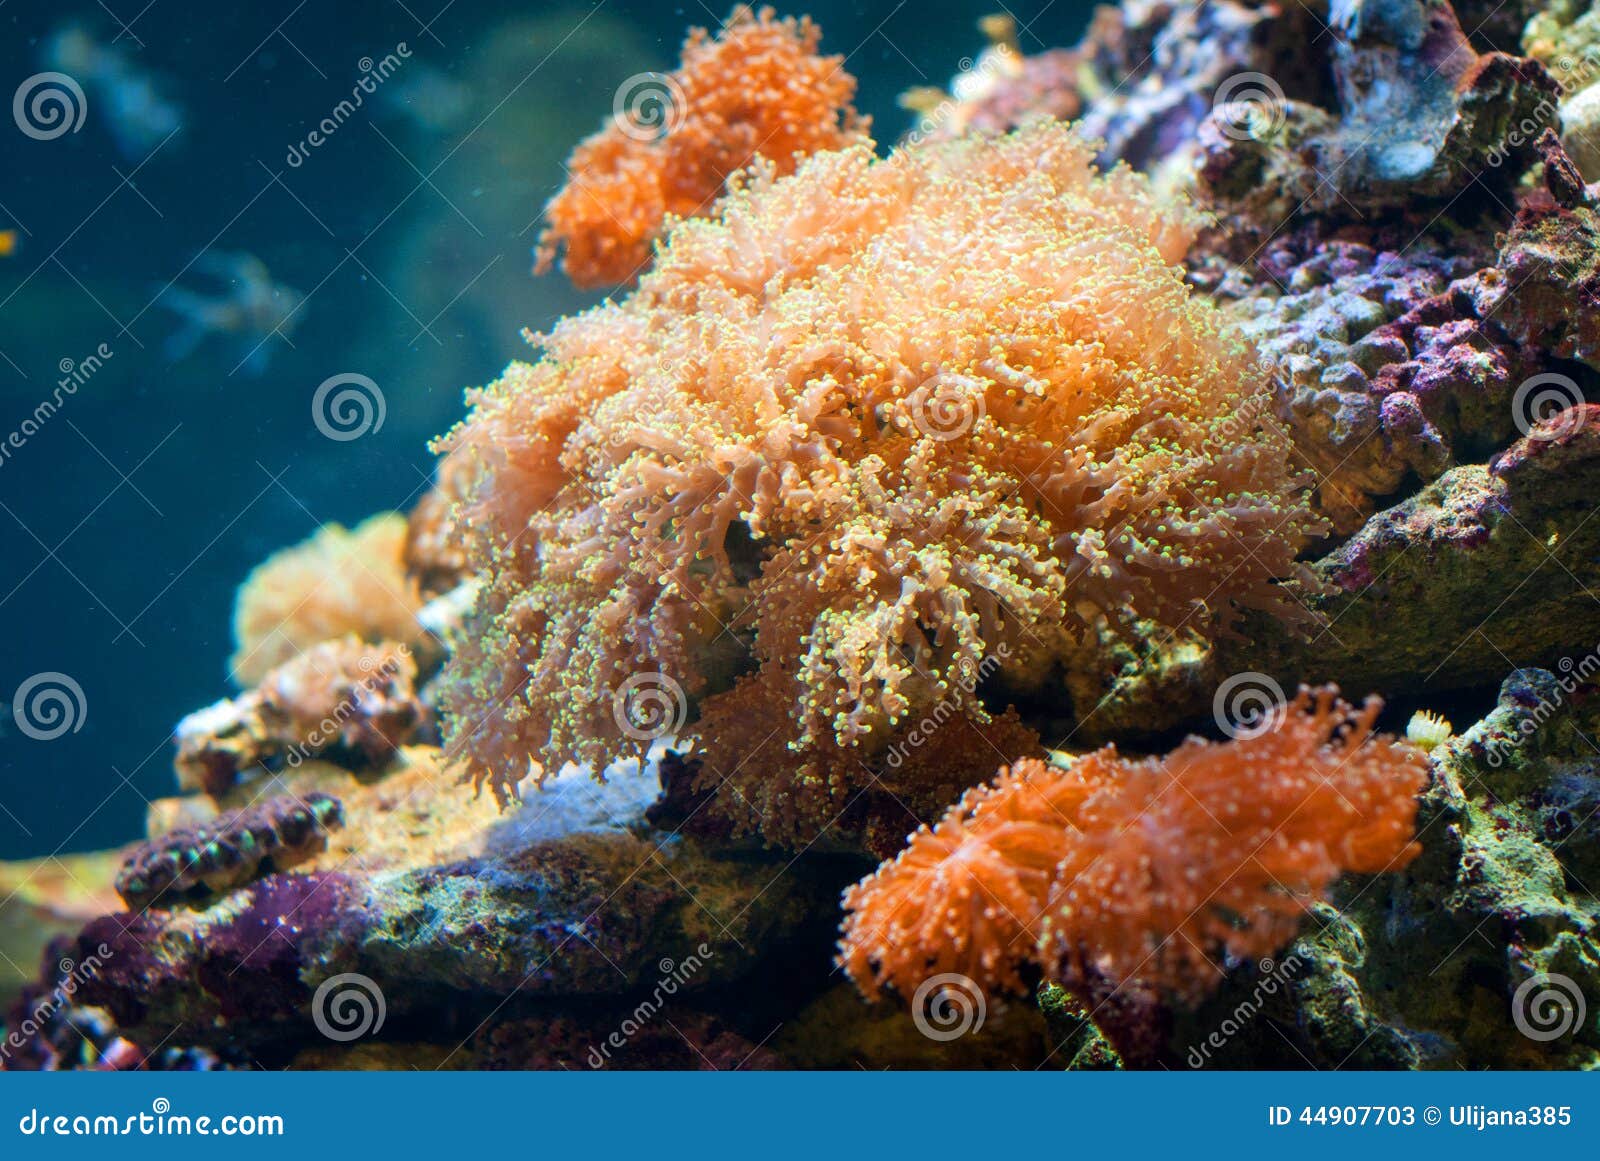 Coral reef stock image. Image of animal, ocean, marine - 44907703